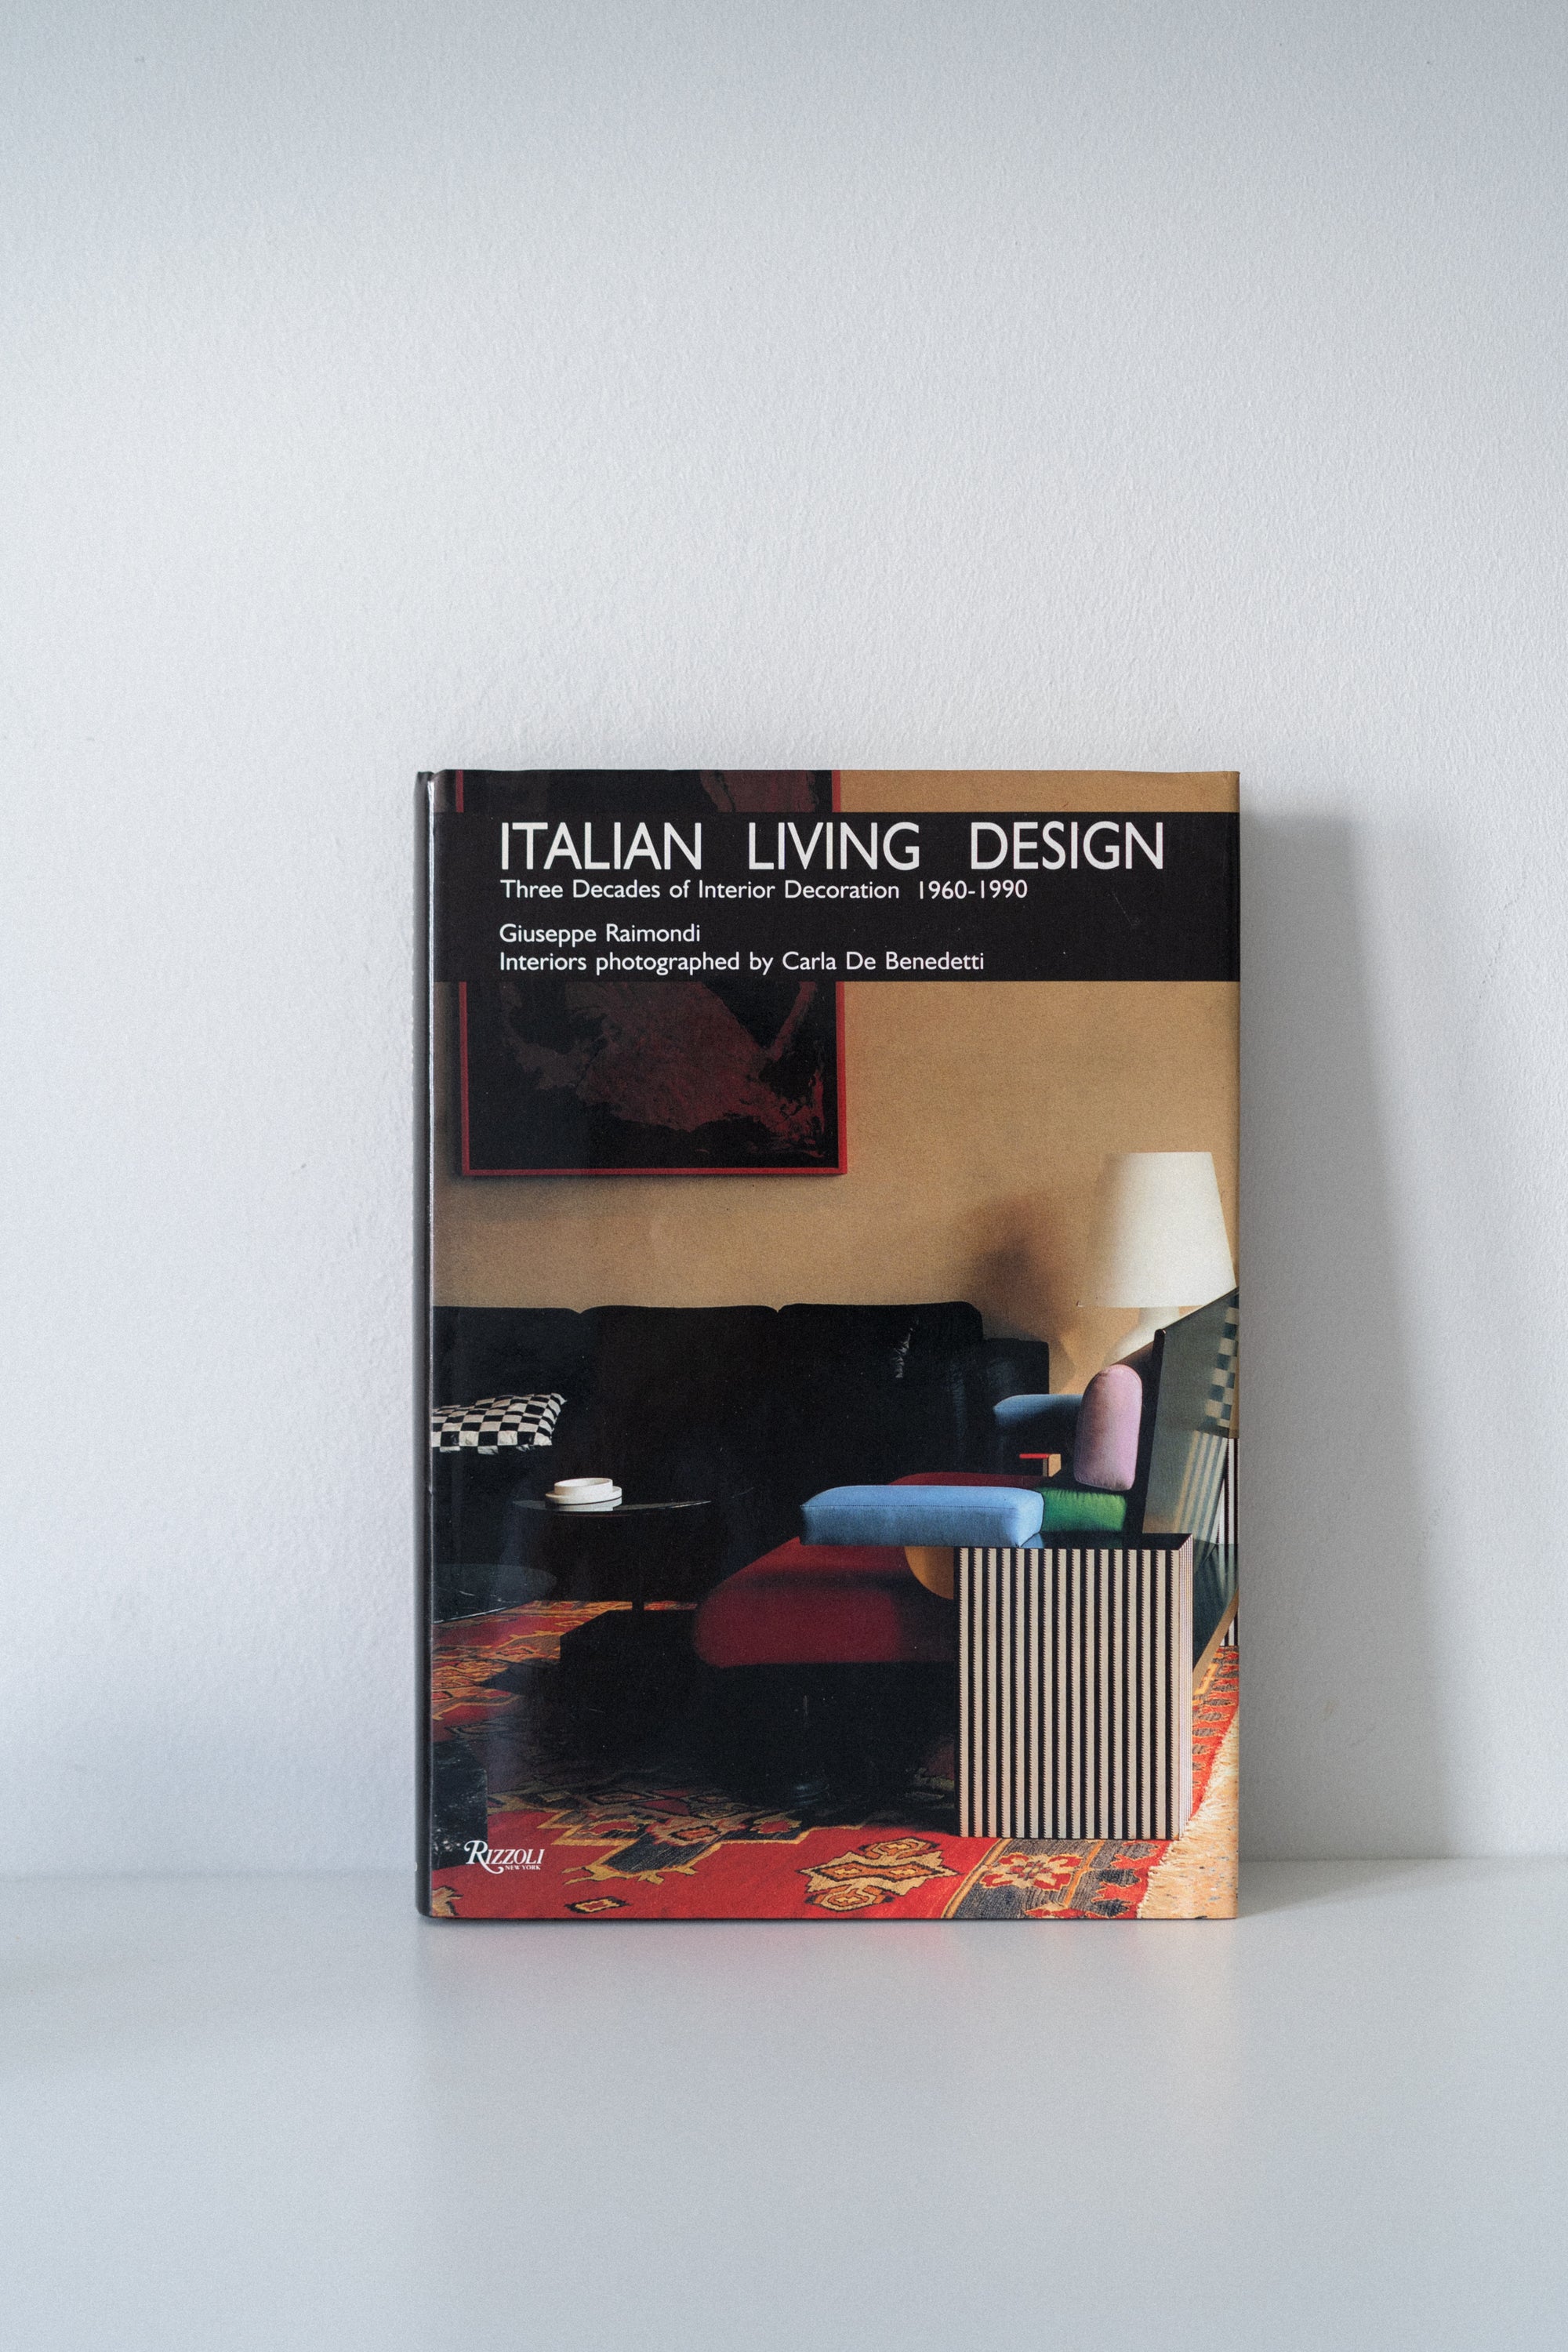 Italian Living Design (1990)